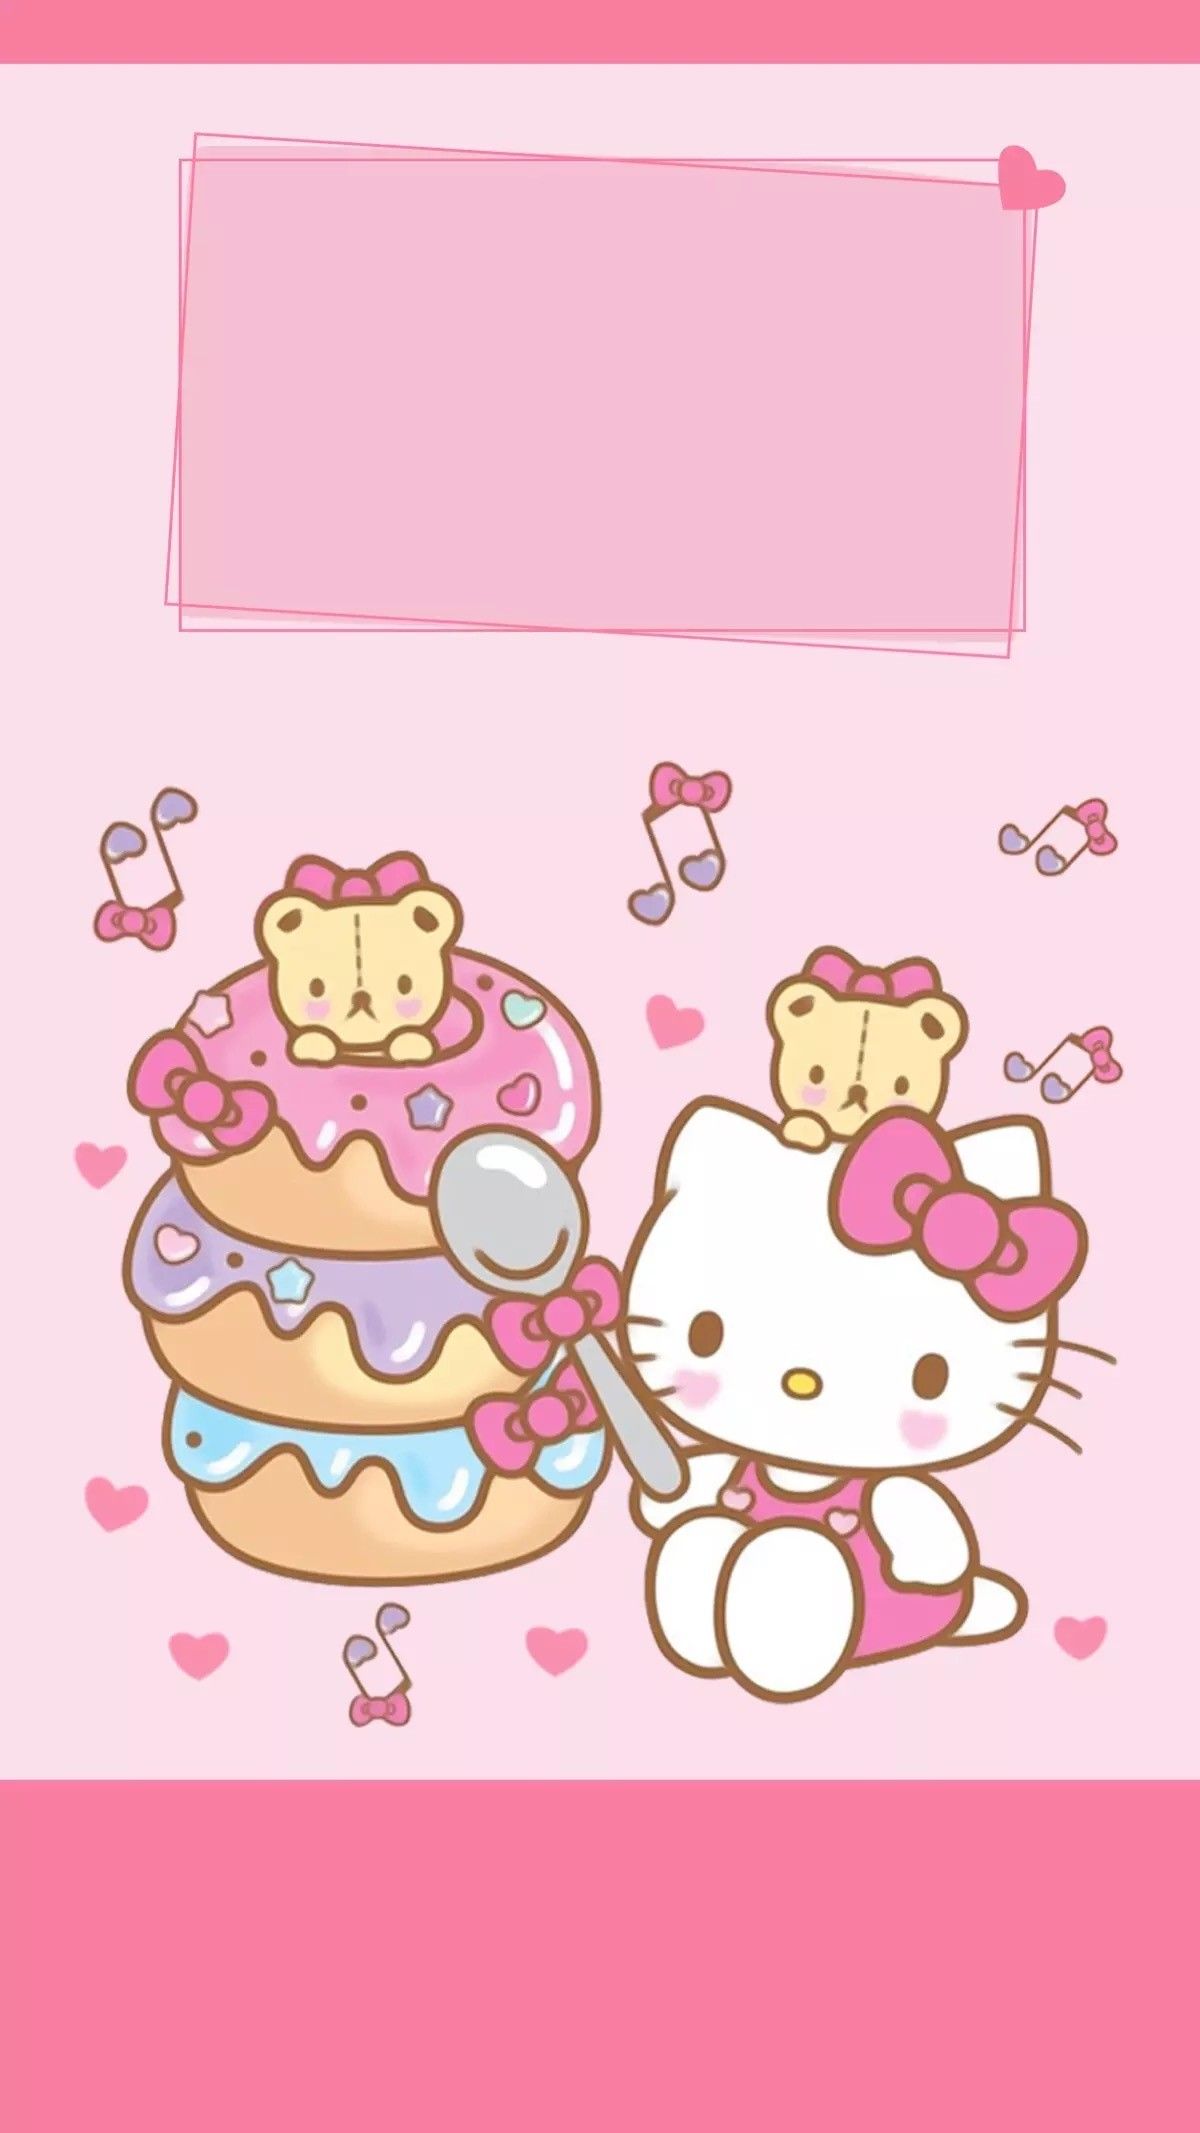 Sanrio Wallpaper, Kawaii Wallpaper, Hello Kitty Wallpaper, Kitty Phone Background